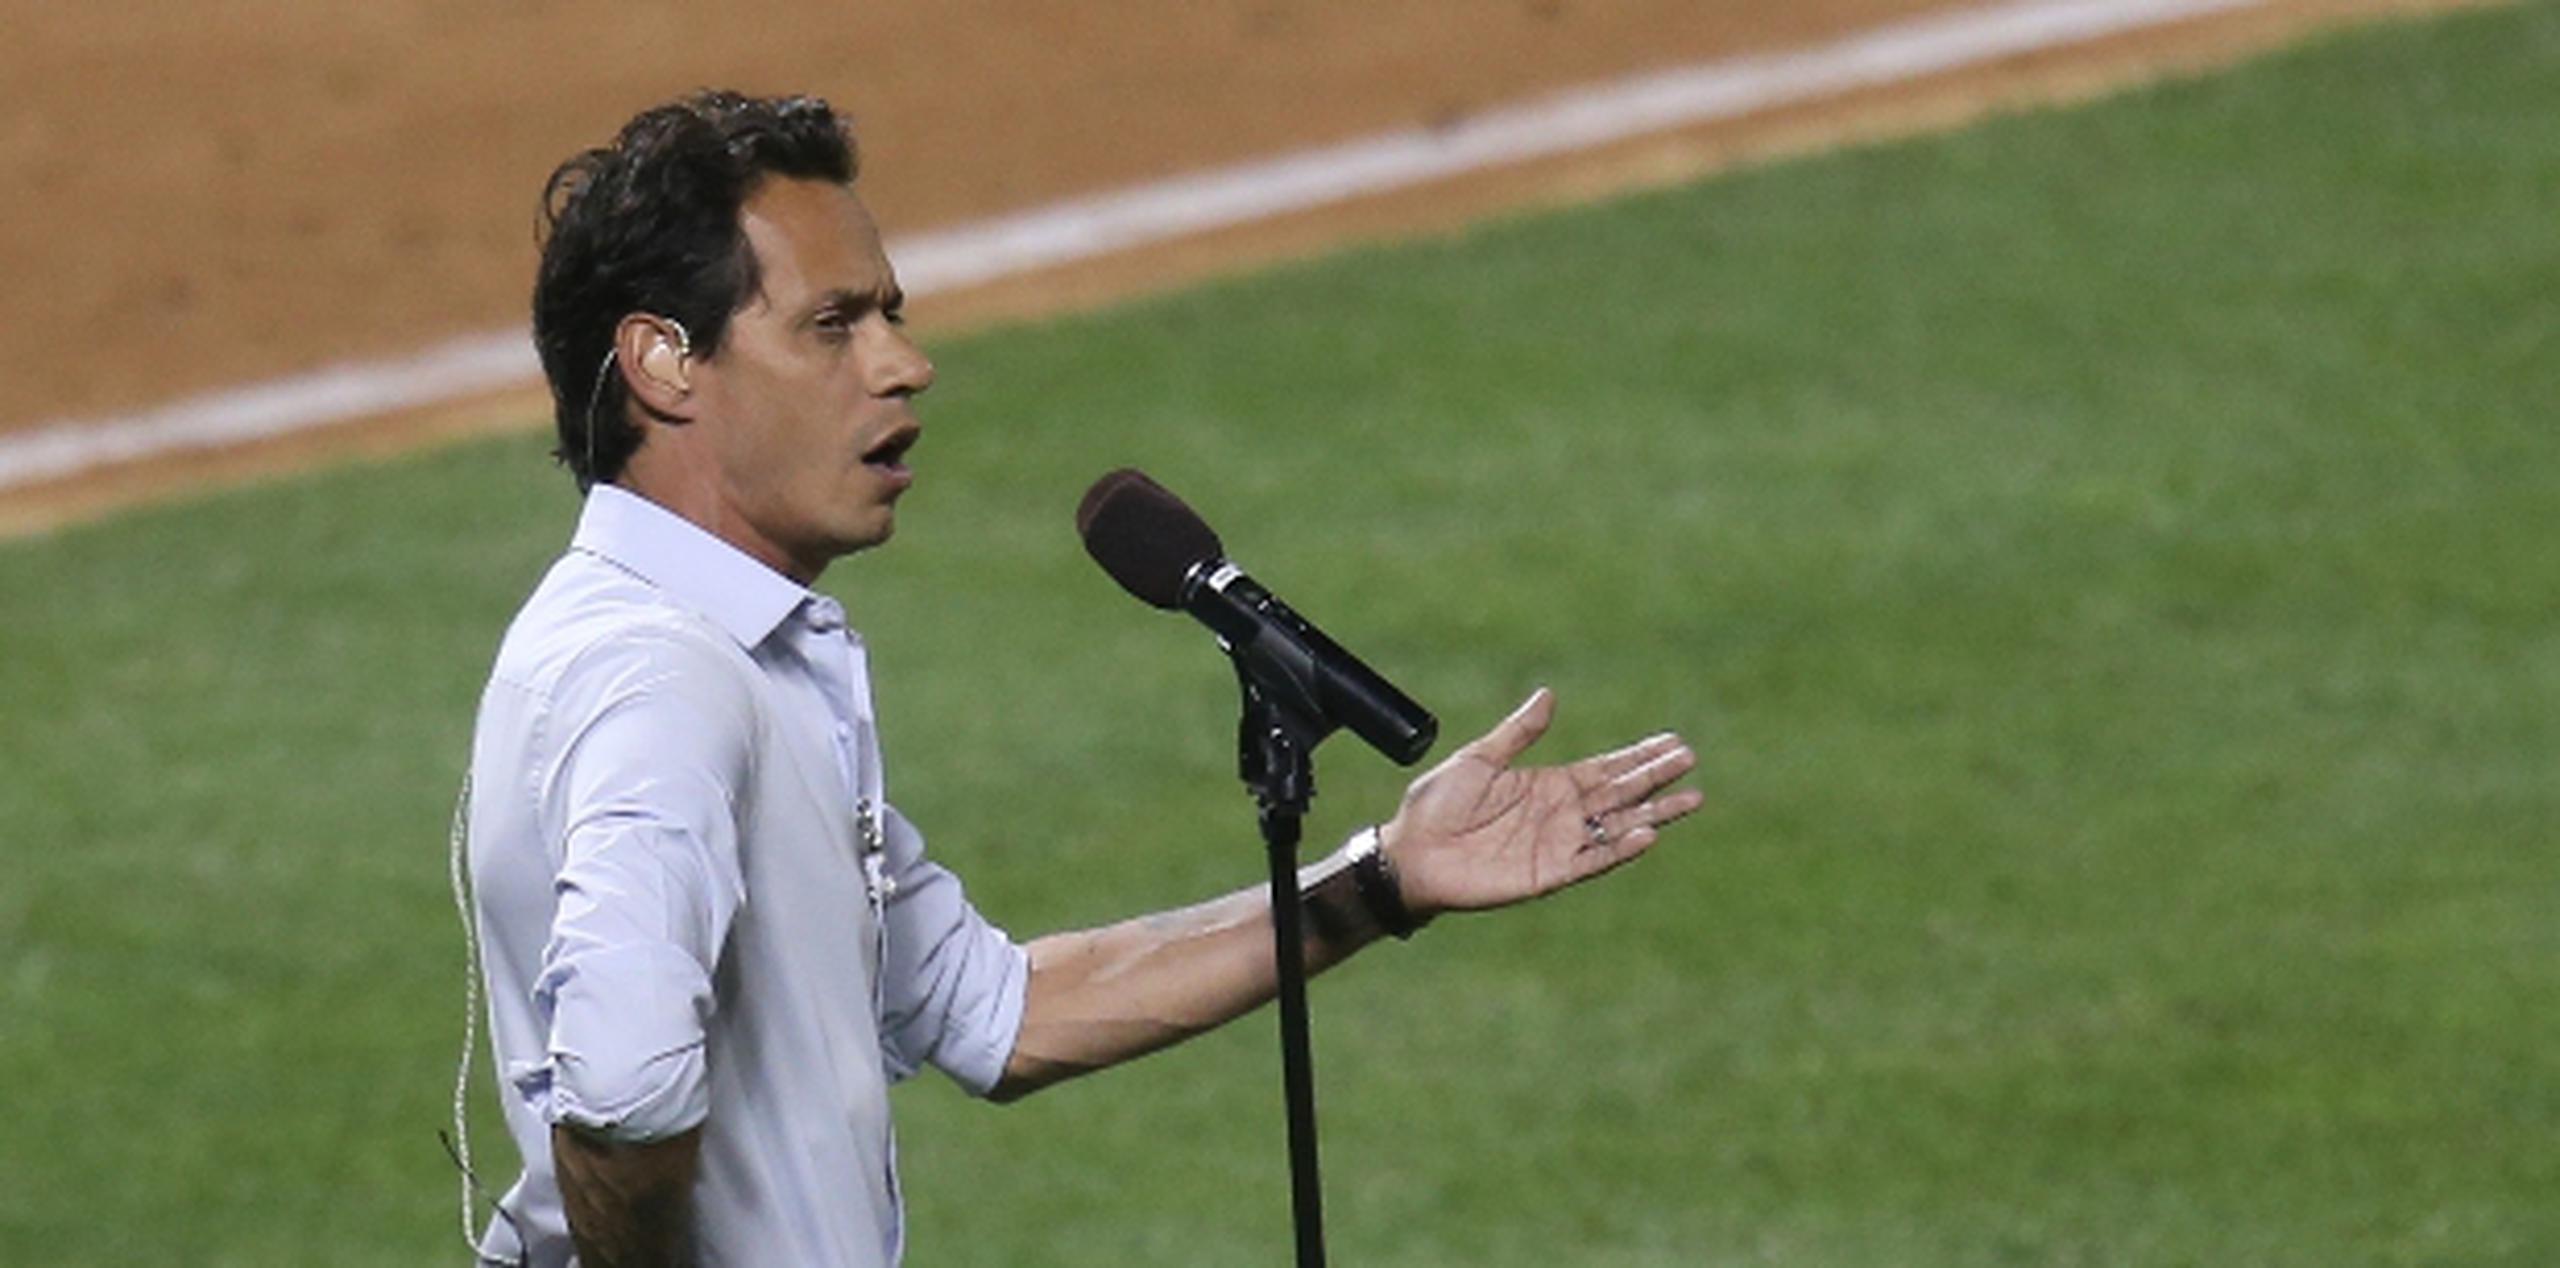 MLB fue criticada por haber puesto a un “extranjero” a cantar “God Bless America”. angel.rivera@gfrmedia.com